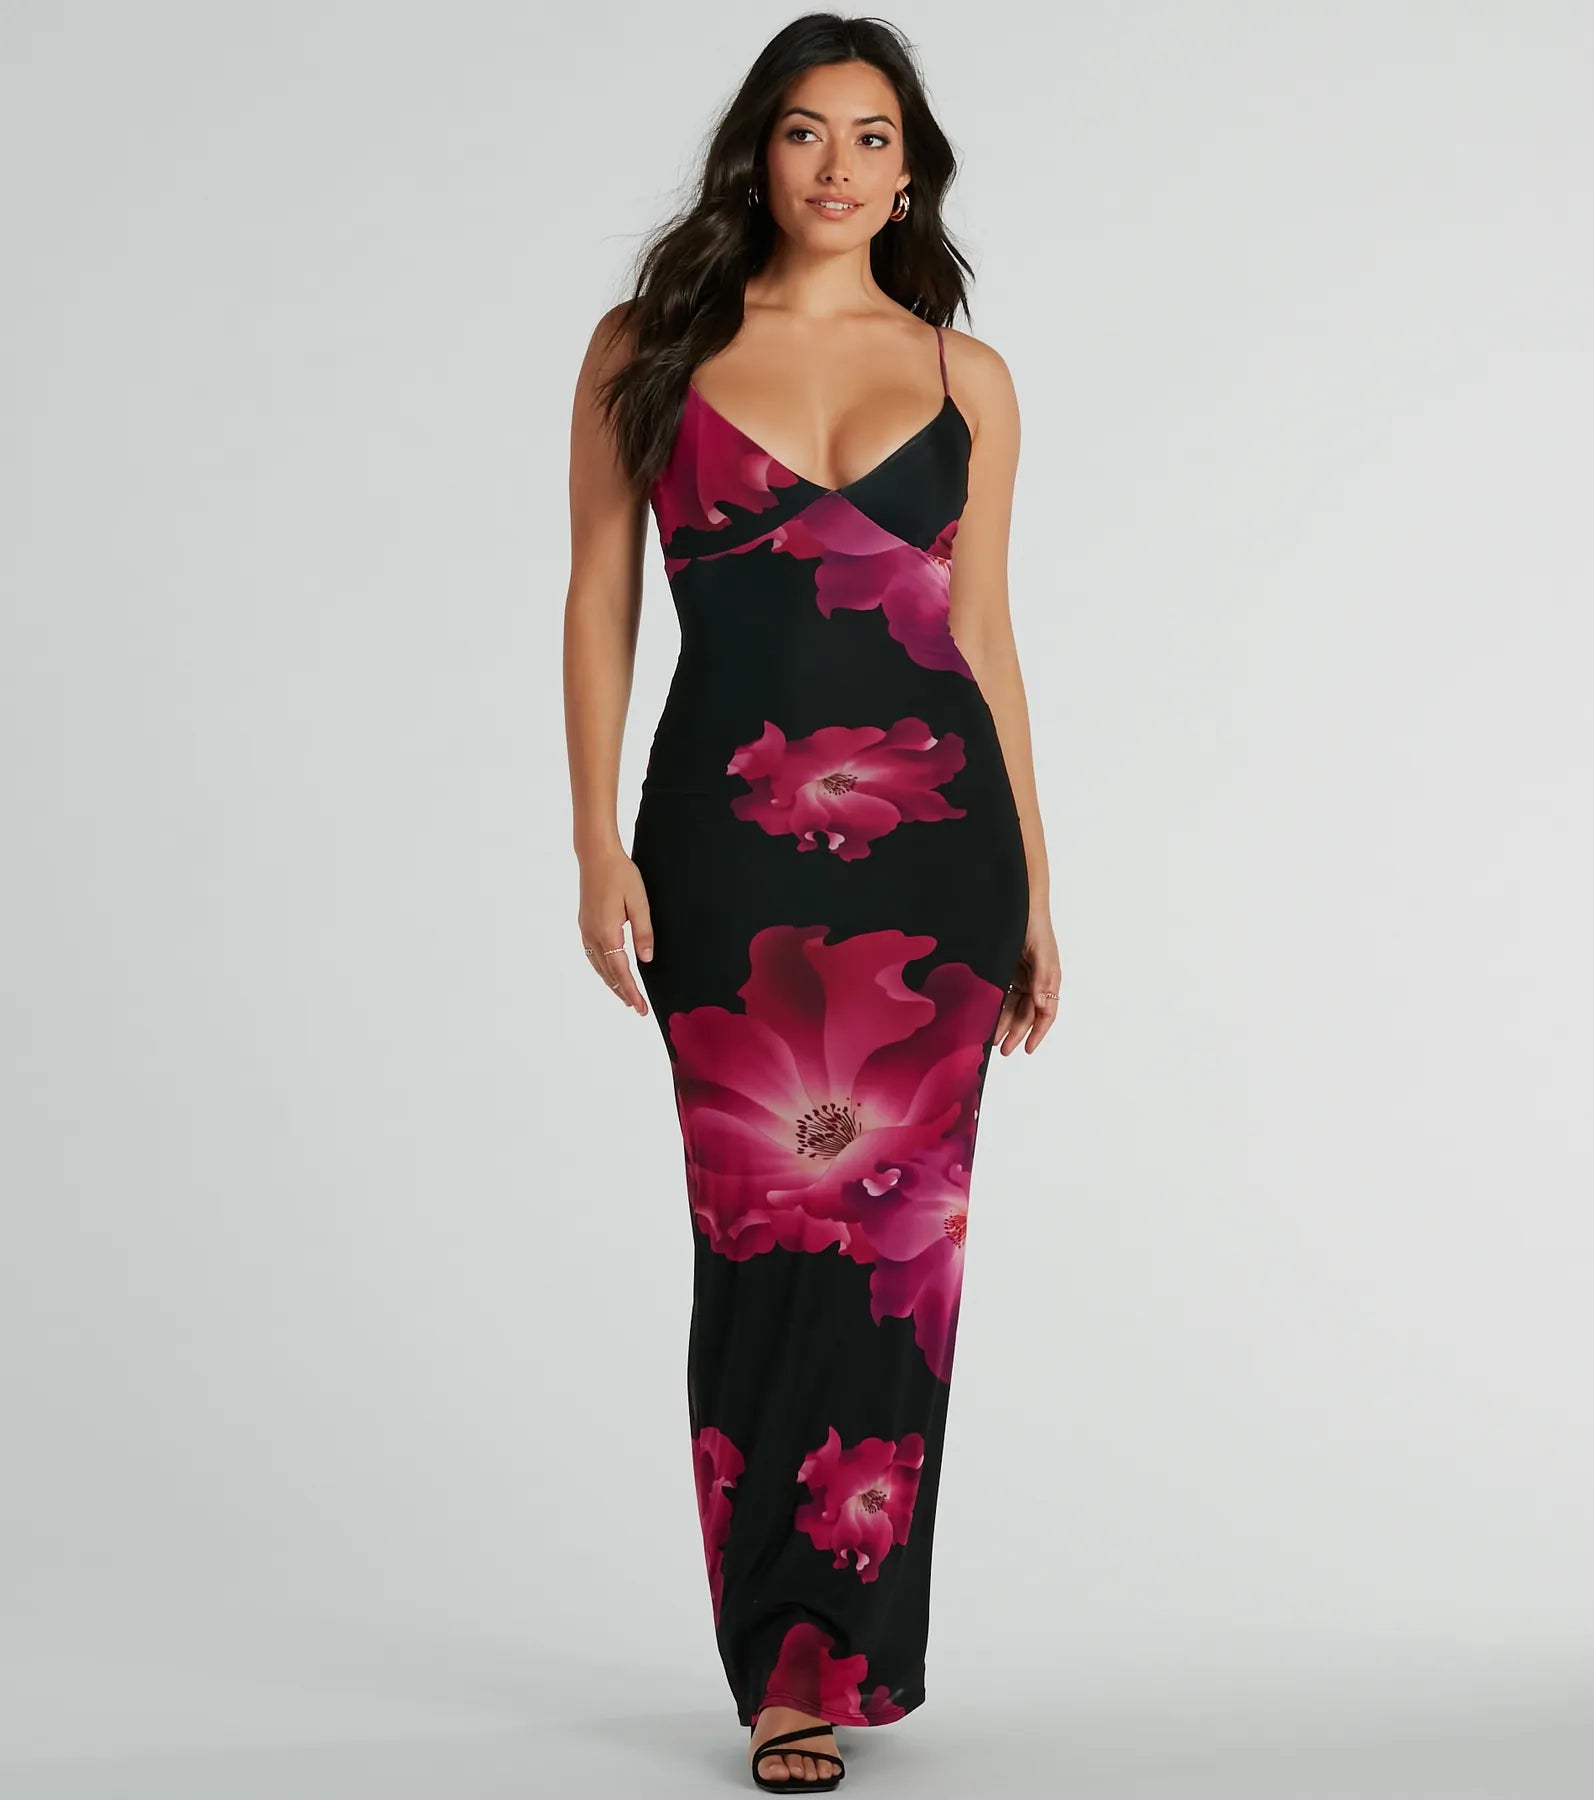 V-neck Mesh Spaghetti Strap Floral Print Bodycon Dress/Maxi Dress